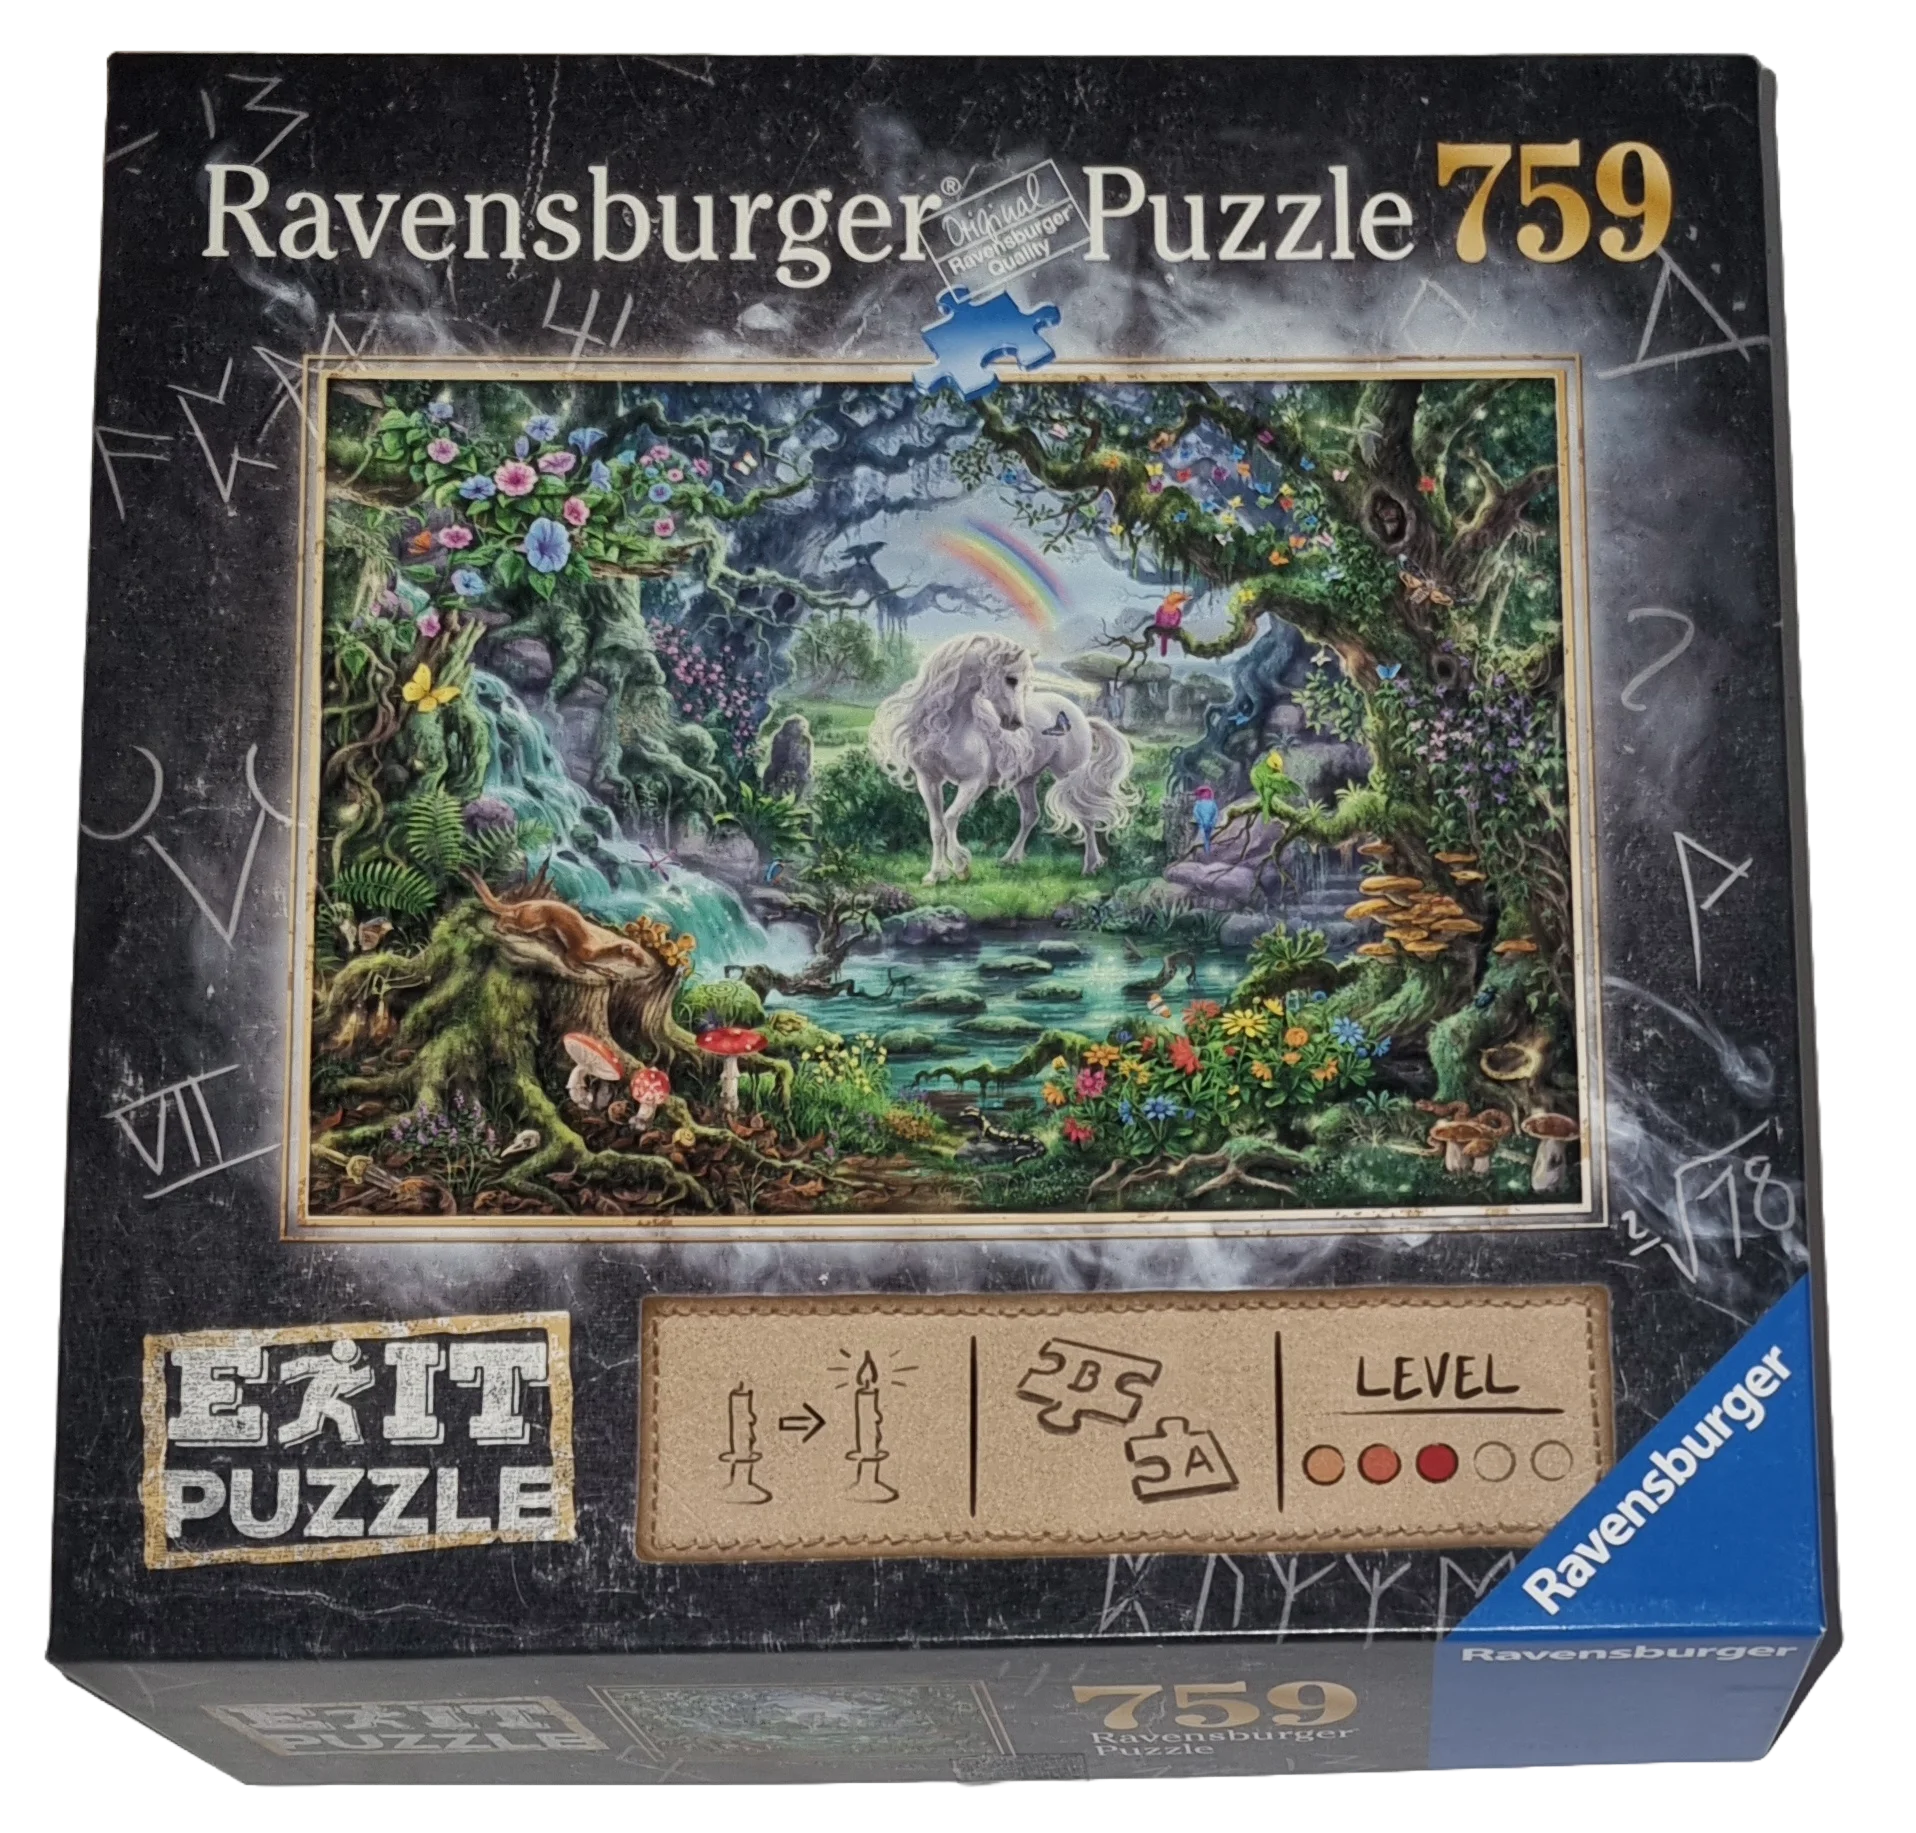 Ravensburger Exit Puzzle 759 Teile Das Einhorn Level